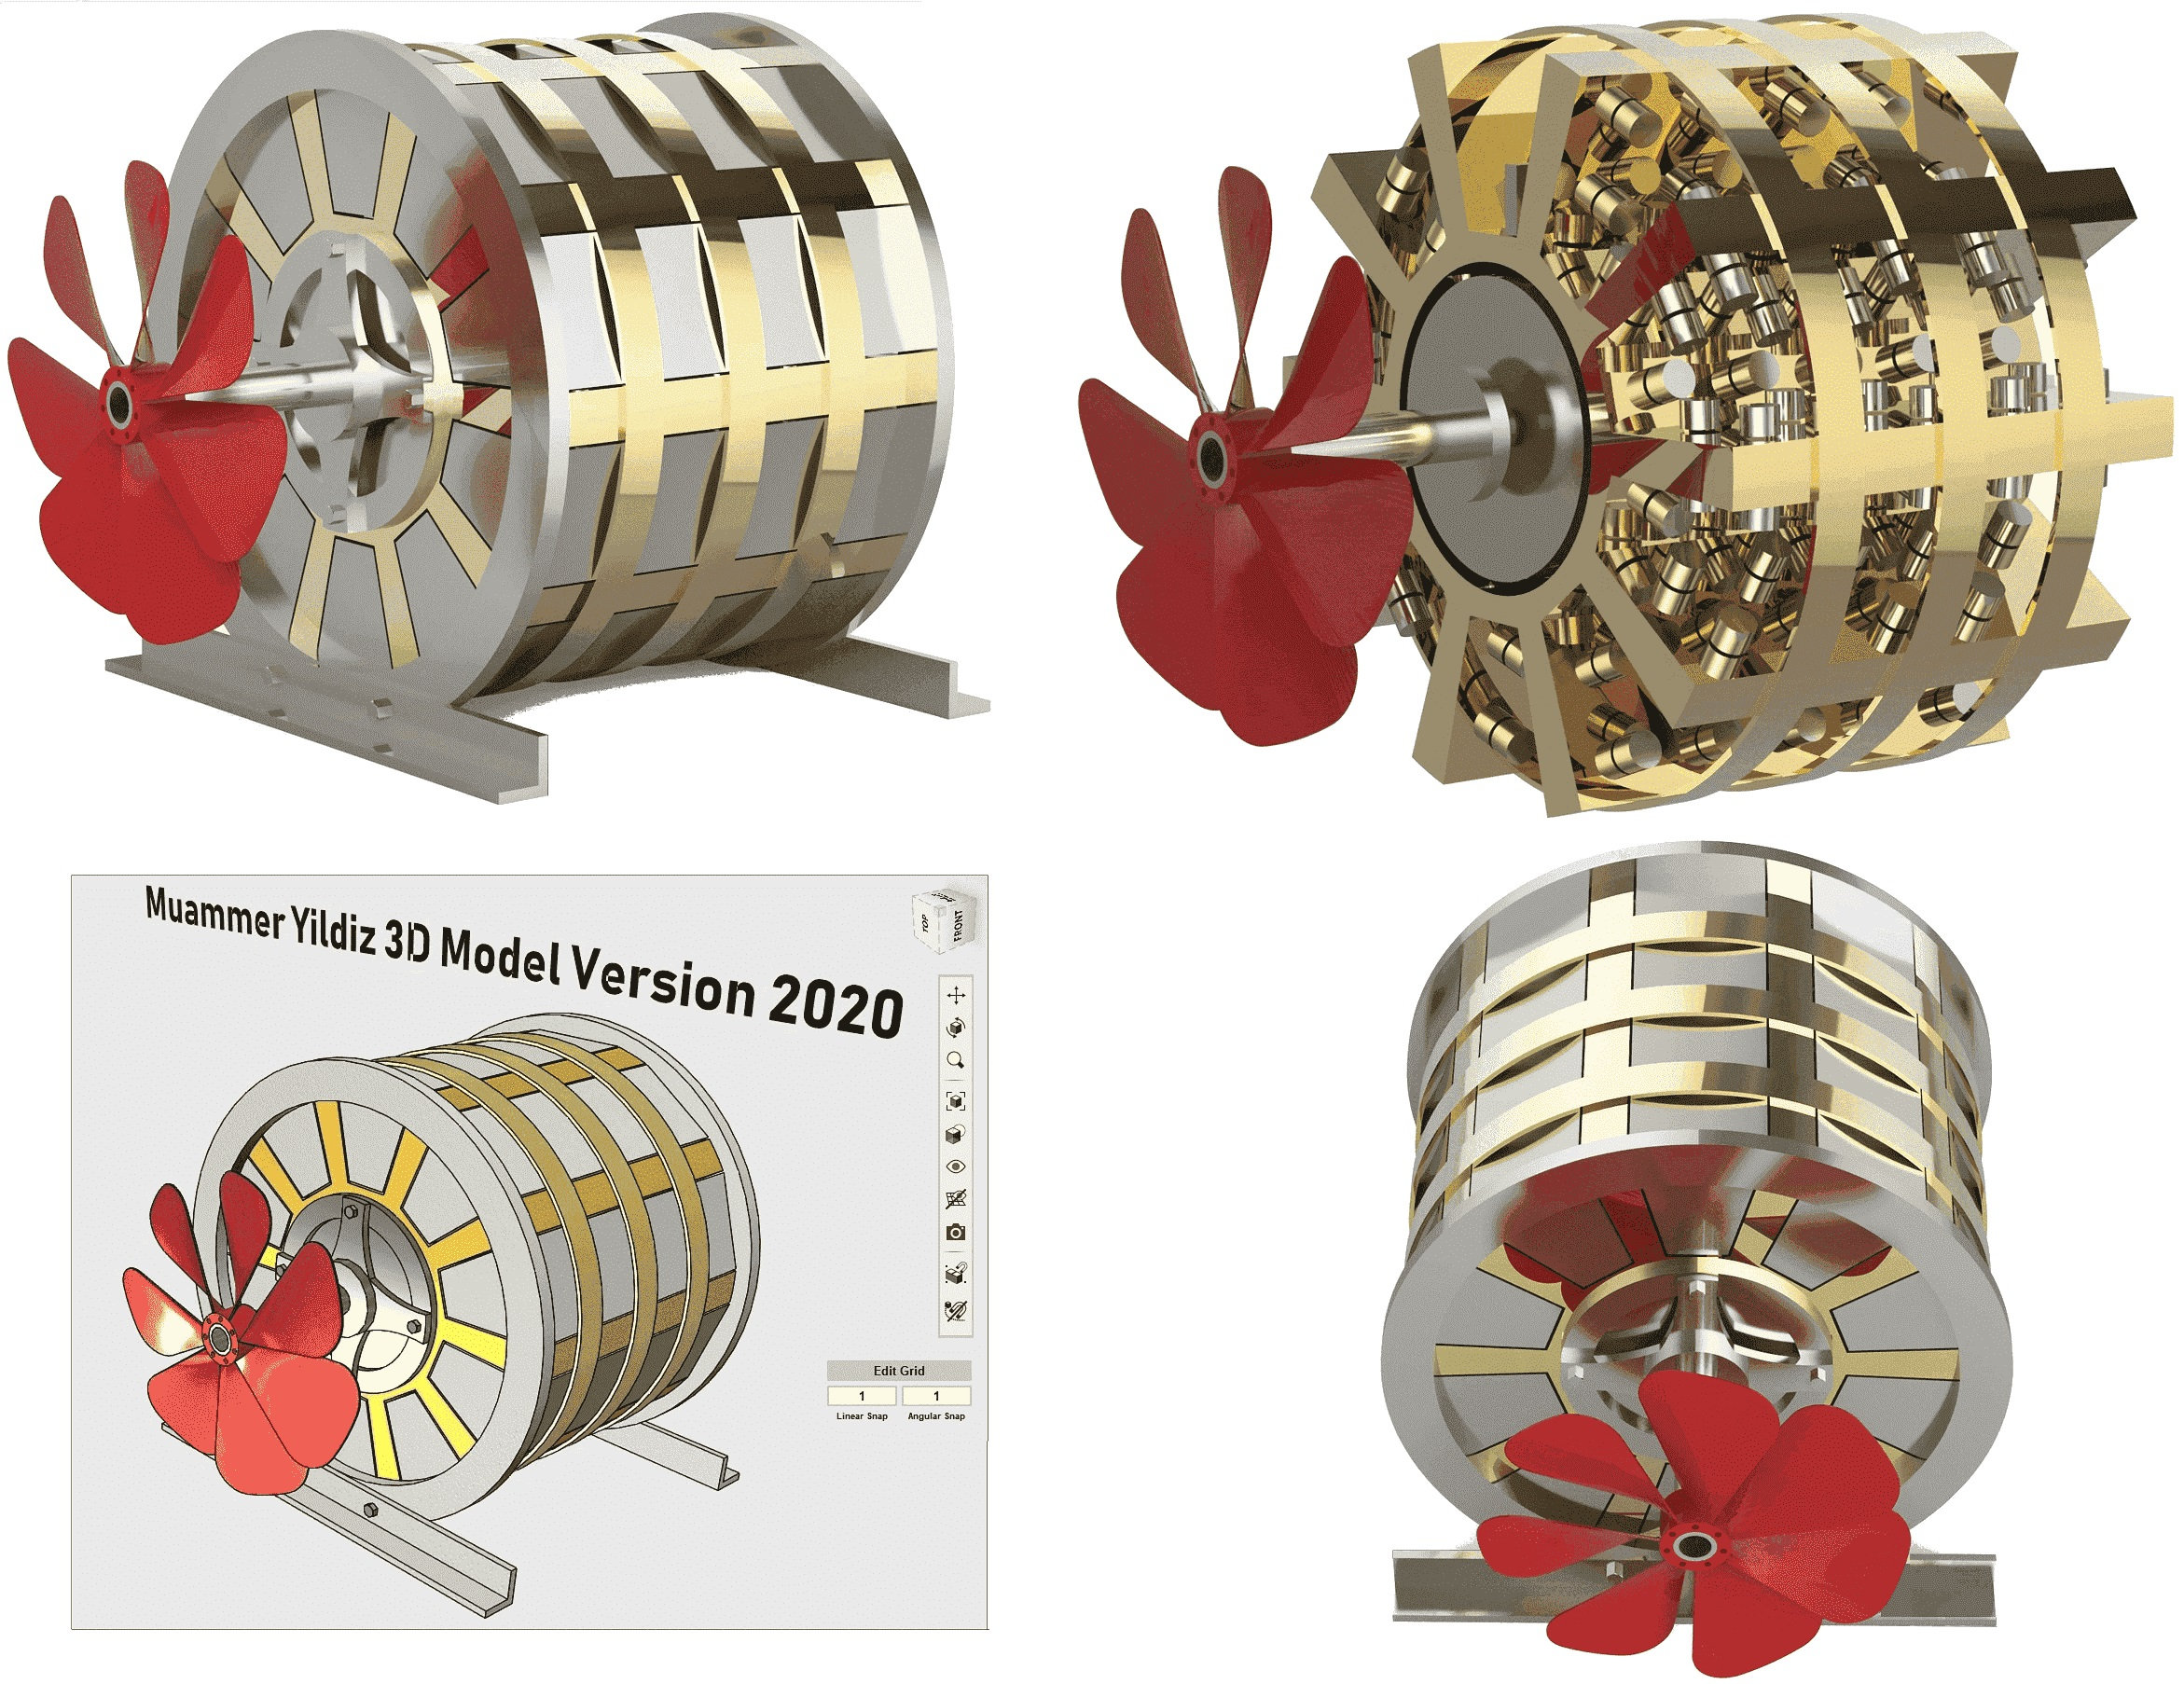 Knorretje Elektricien zak Magnet Motor Free Energy Generator Muammer Yildiz 3D Model DIY | Etsy